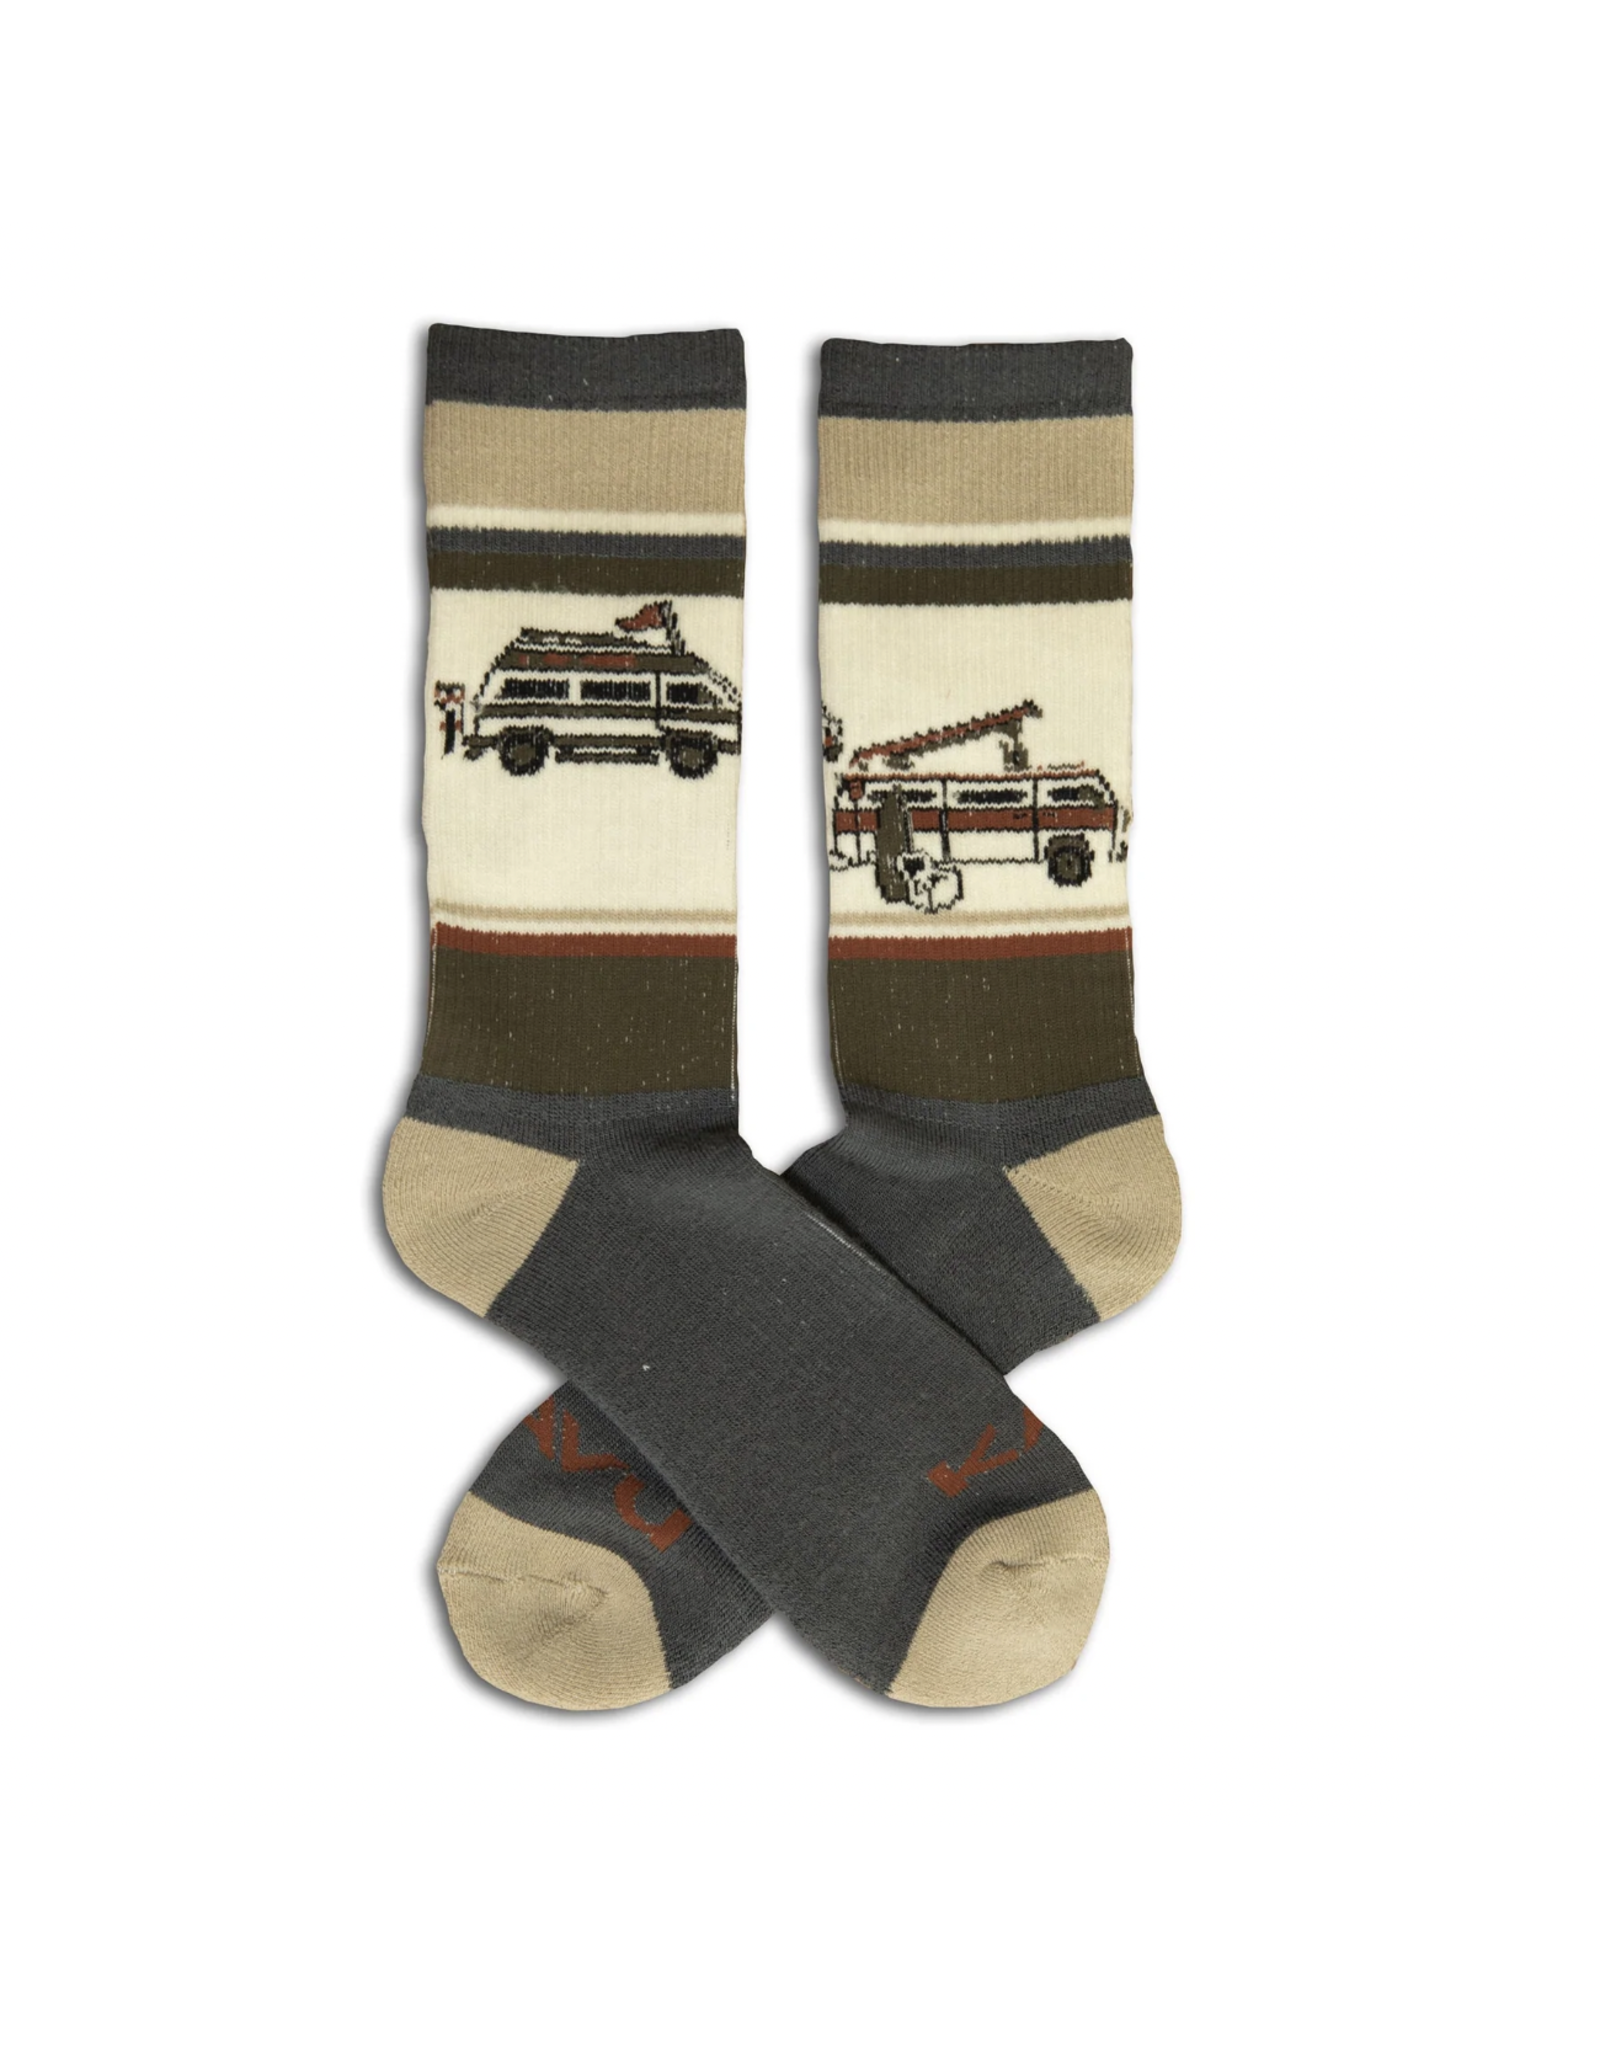 Kavu Kavu - Moonwalk socks (Dream van)